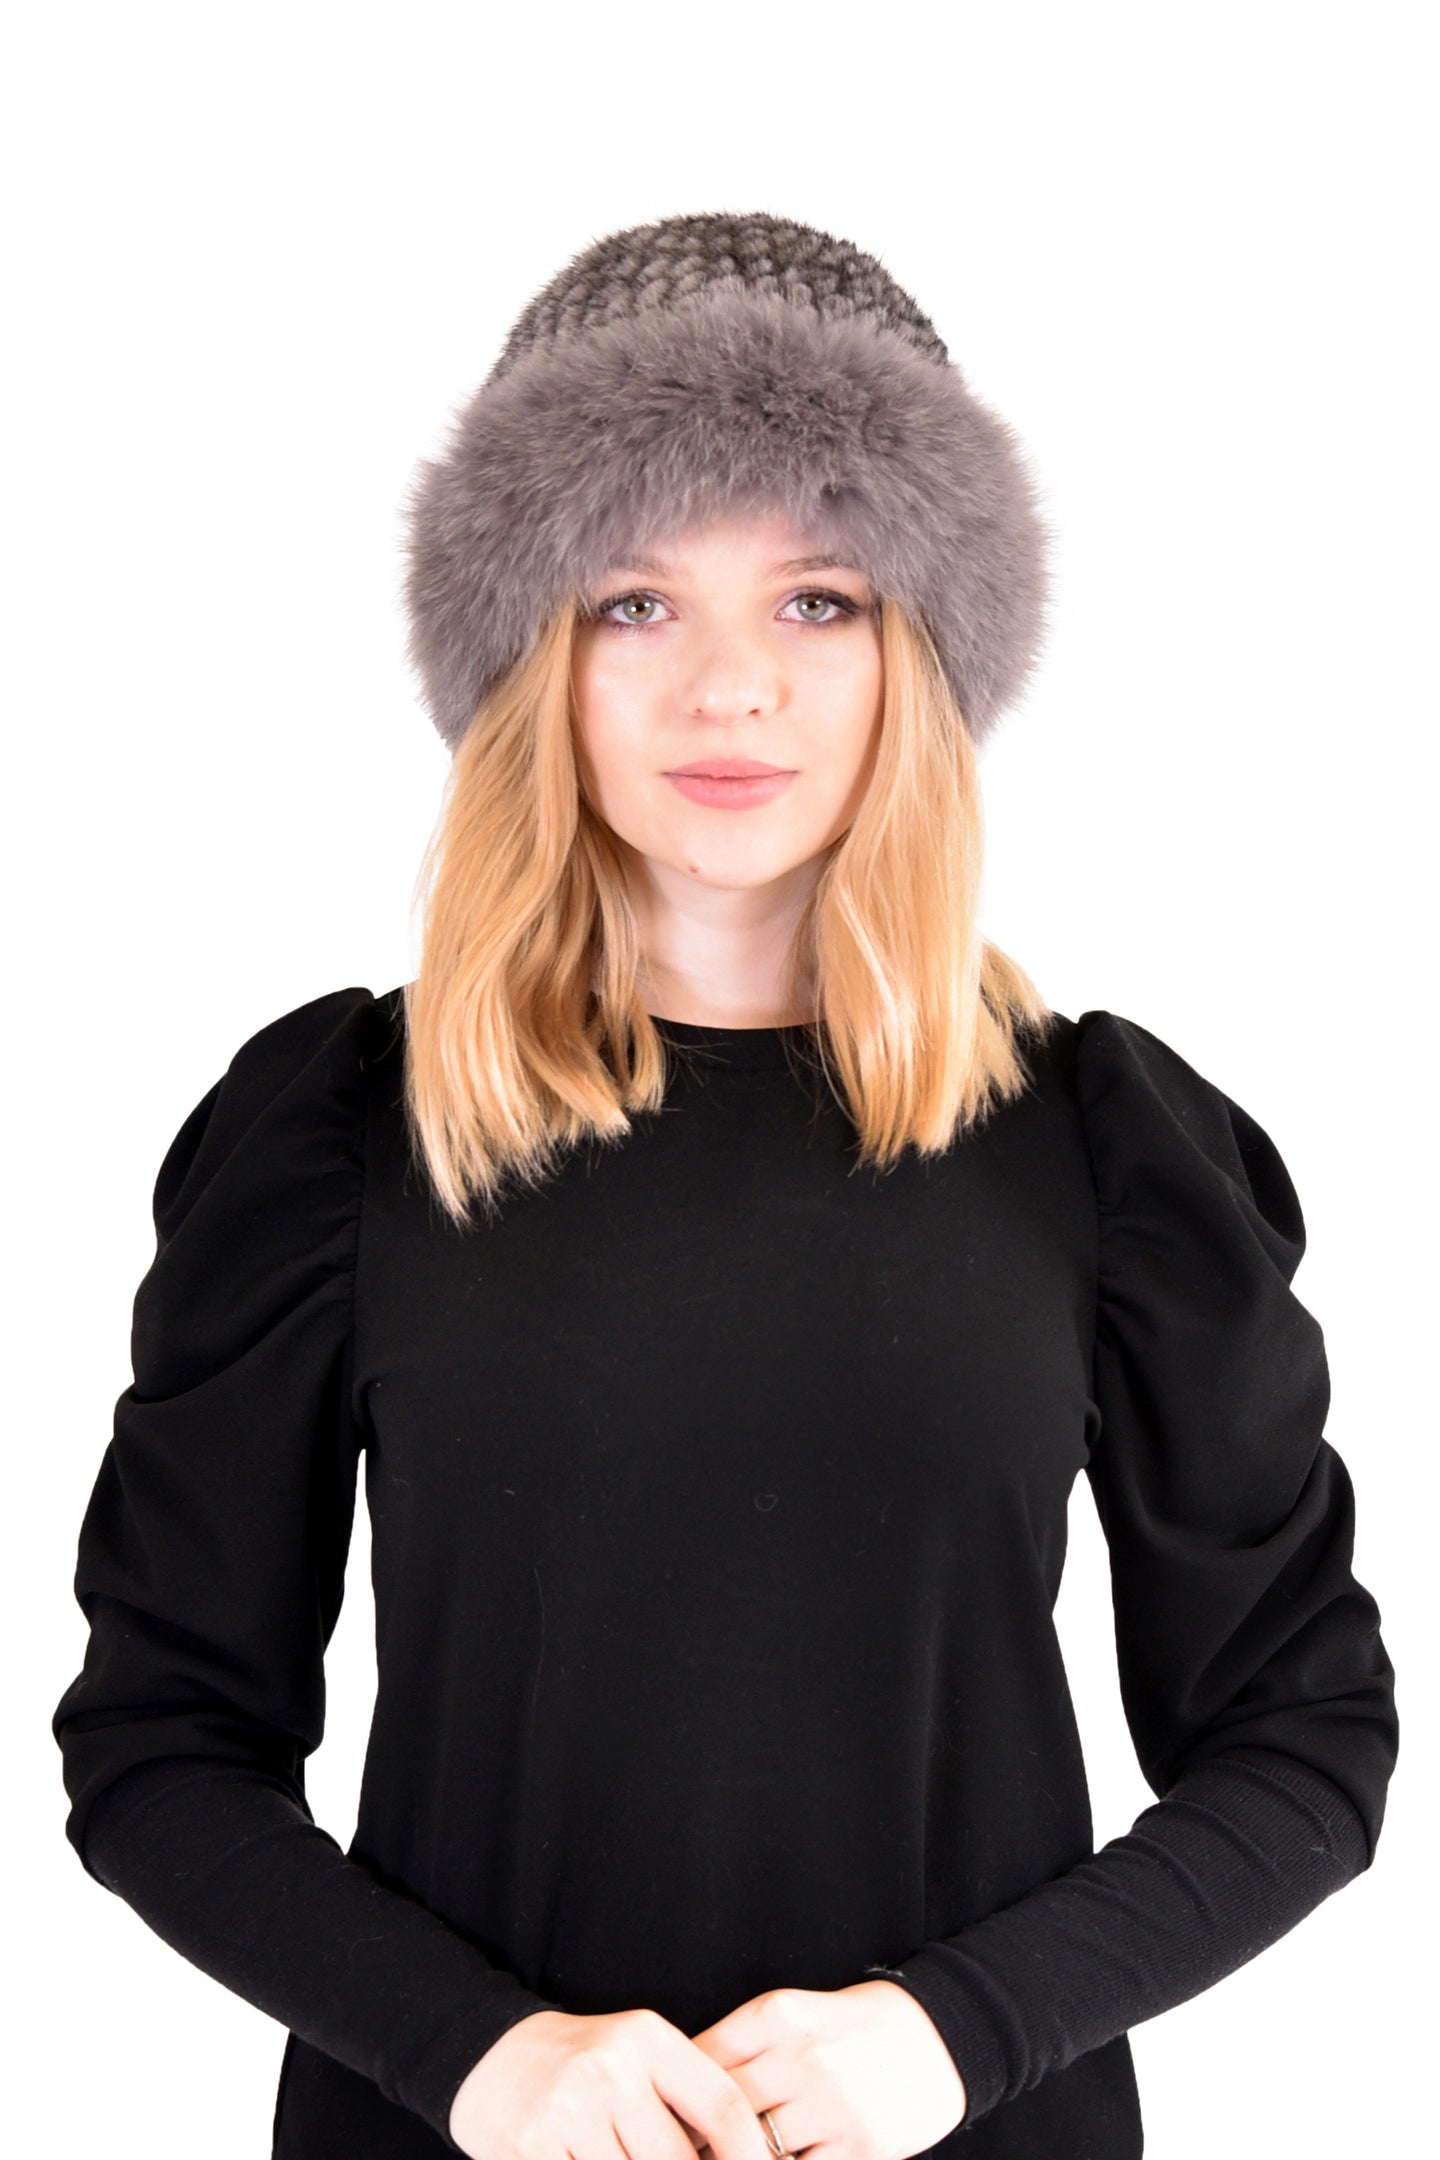 Knitted Danish Mink Fur Cossack Beanie Hat with Finnish Fox Fur Trim